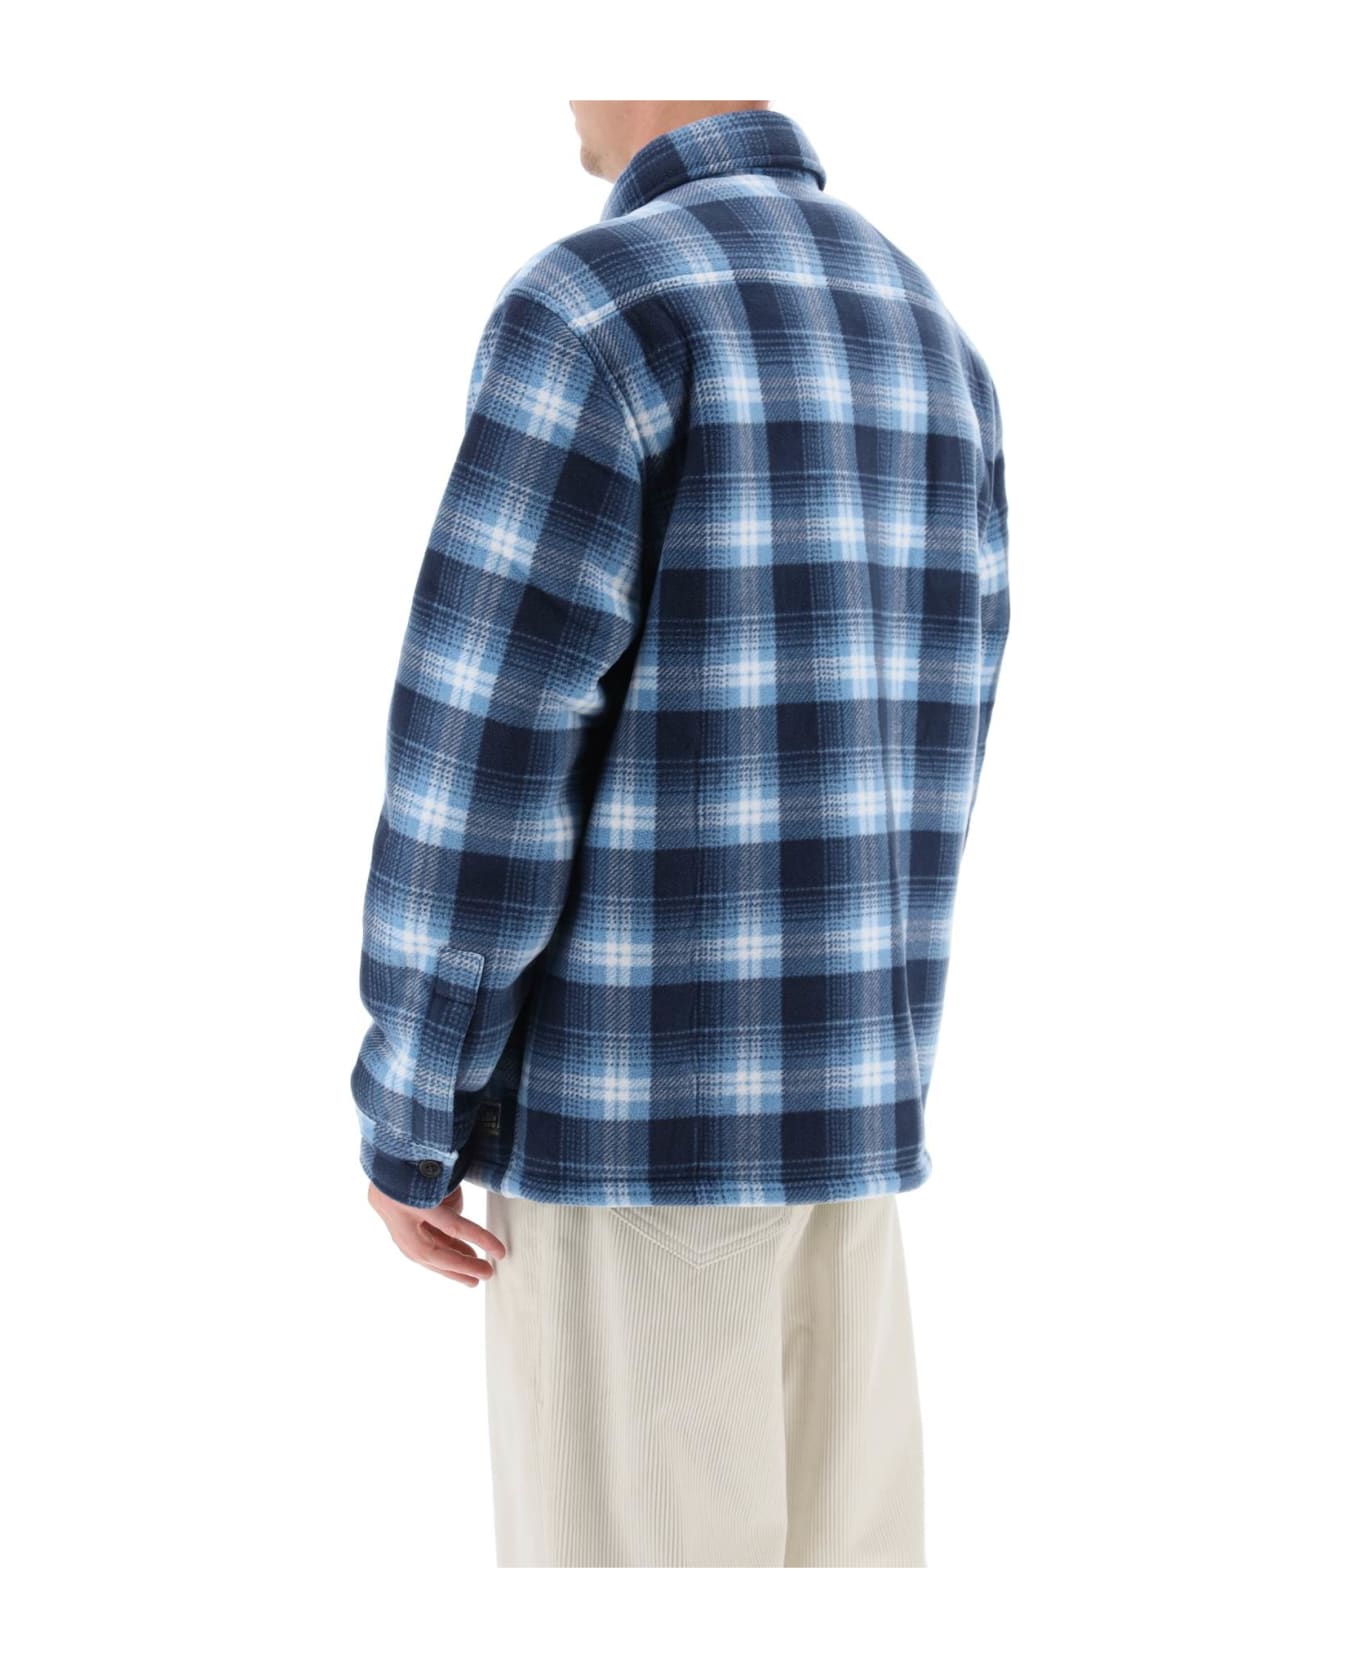 Polo Ralph Lauren Check Overshirt - OUTDOOR OMBRE PLAID (Blue)